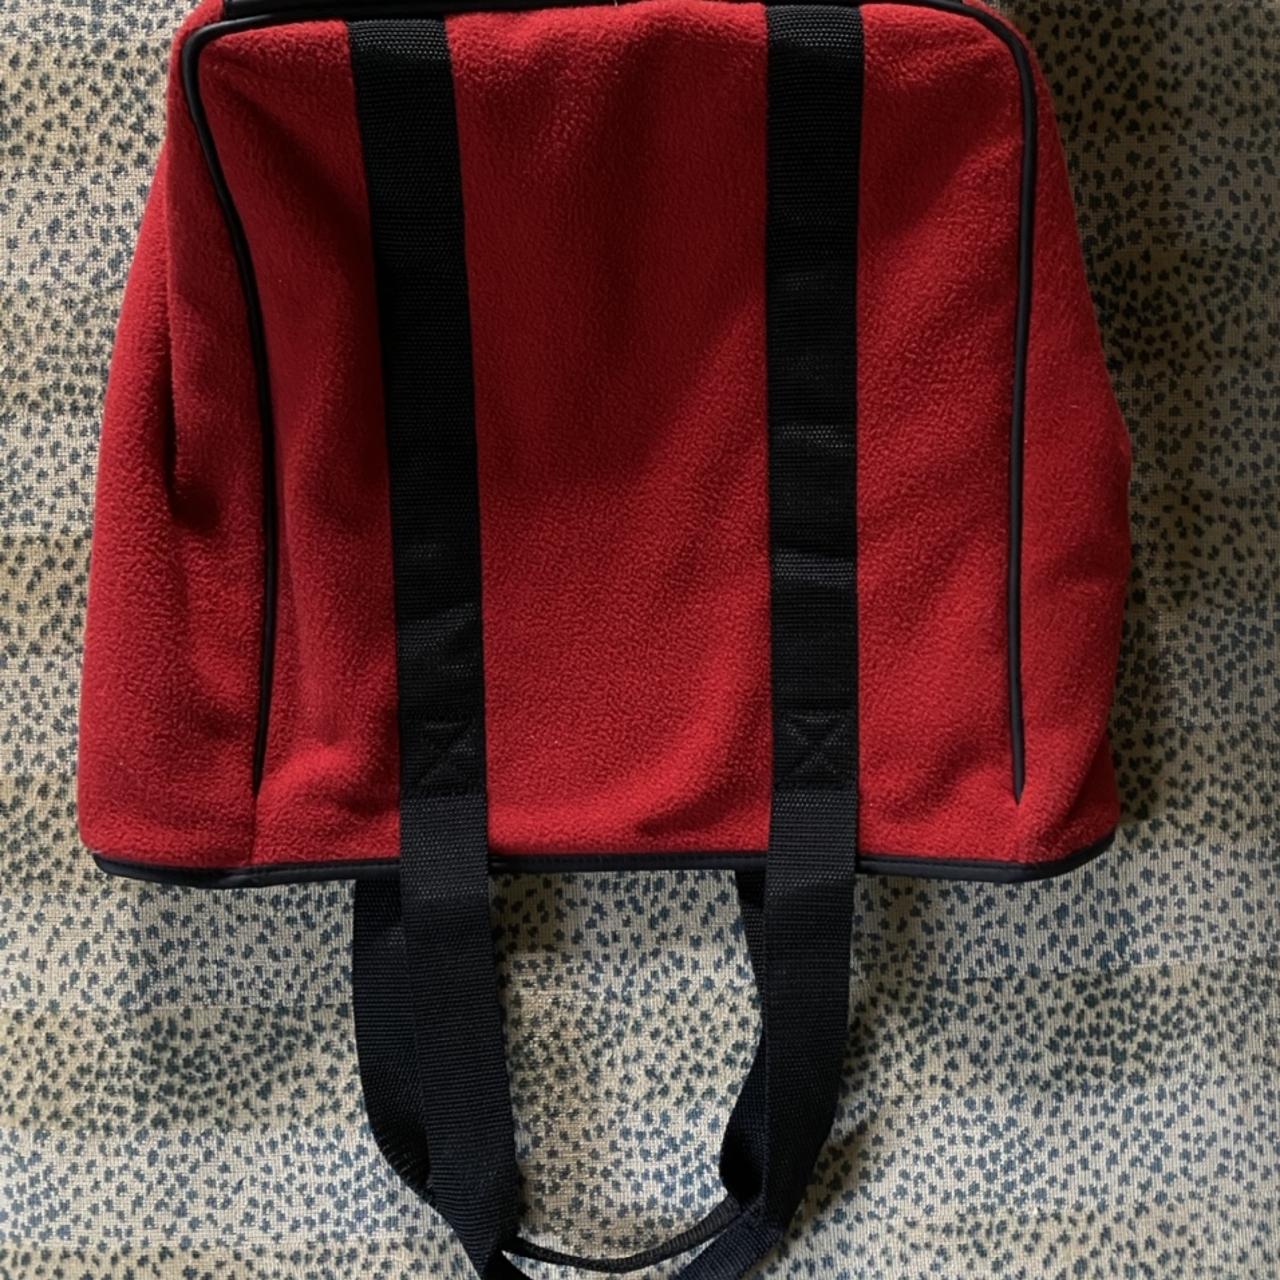 Supreme Polartec fleece tote bag Red and black Soft... - Depop